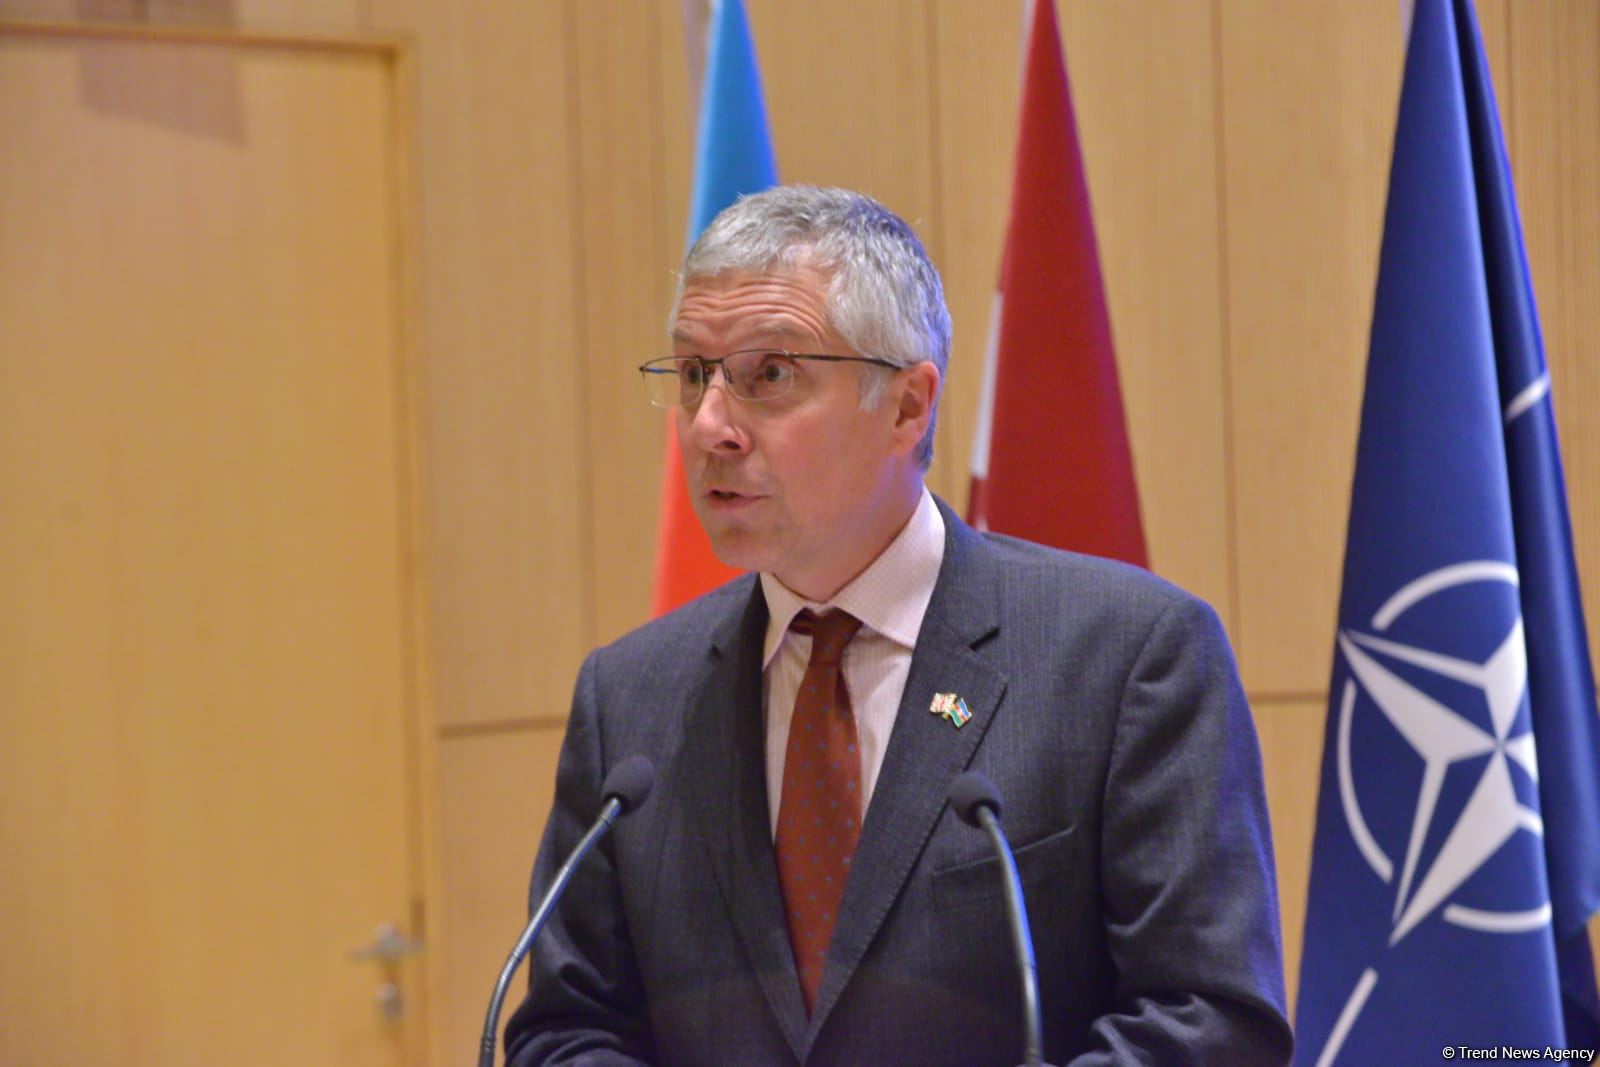 UK's ambassador talks large-scale destruction he witnessed in Azerbaijan's Aghdam